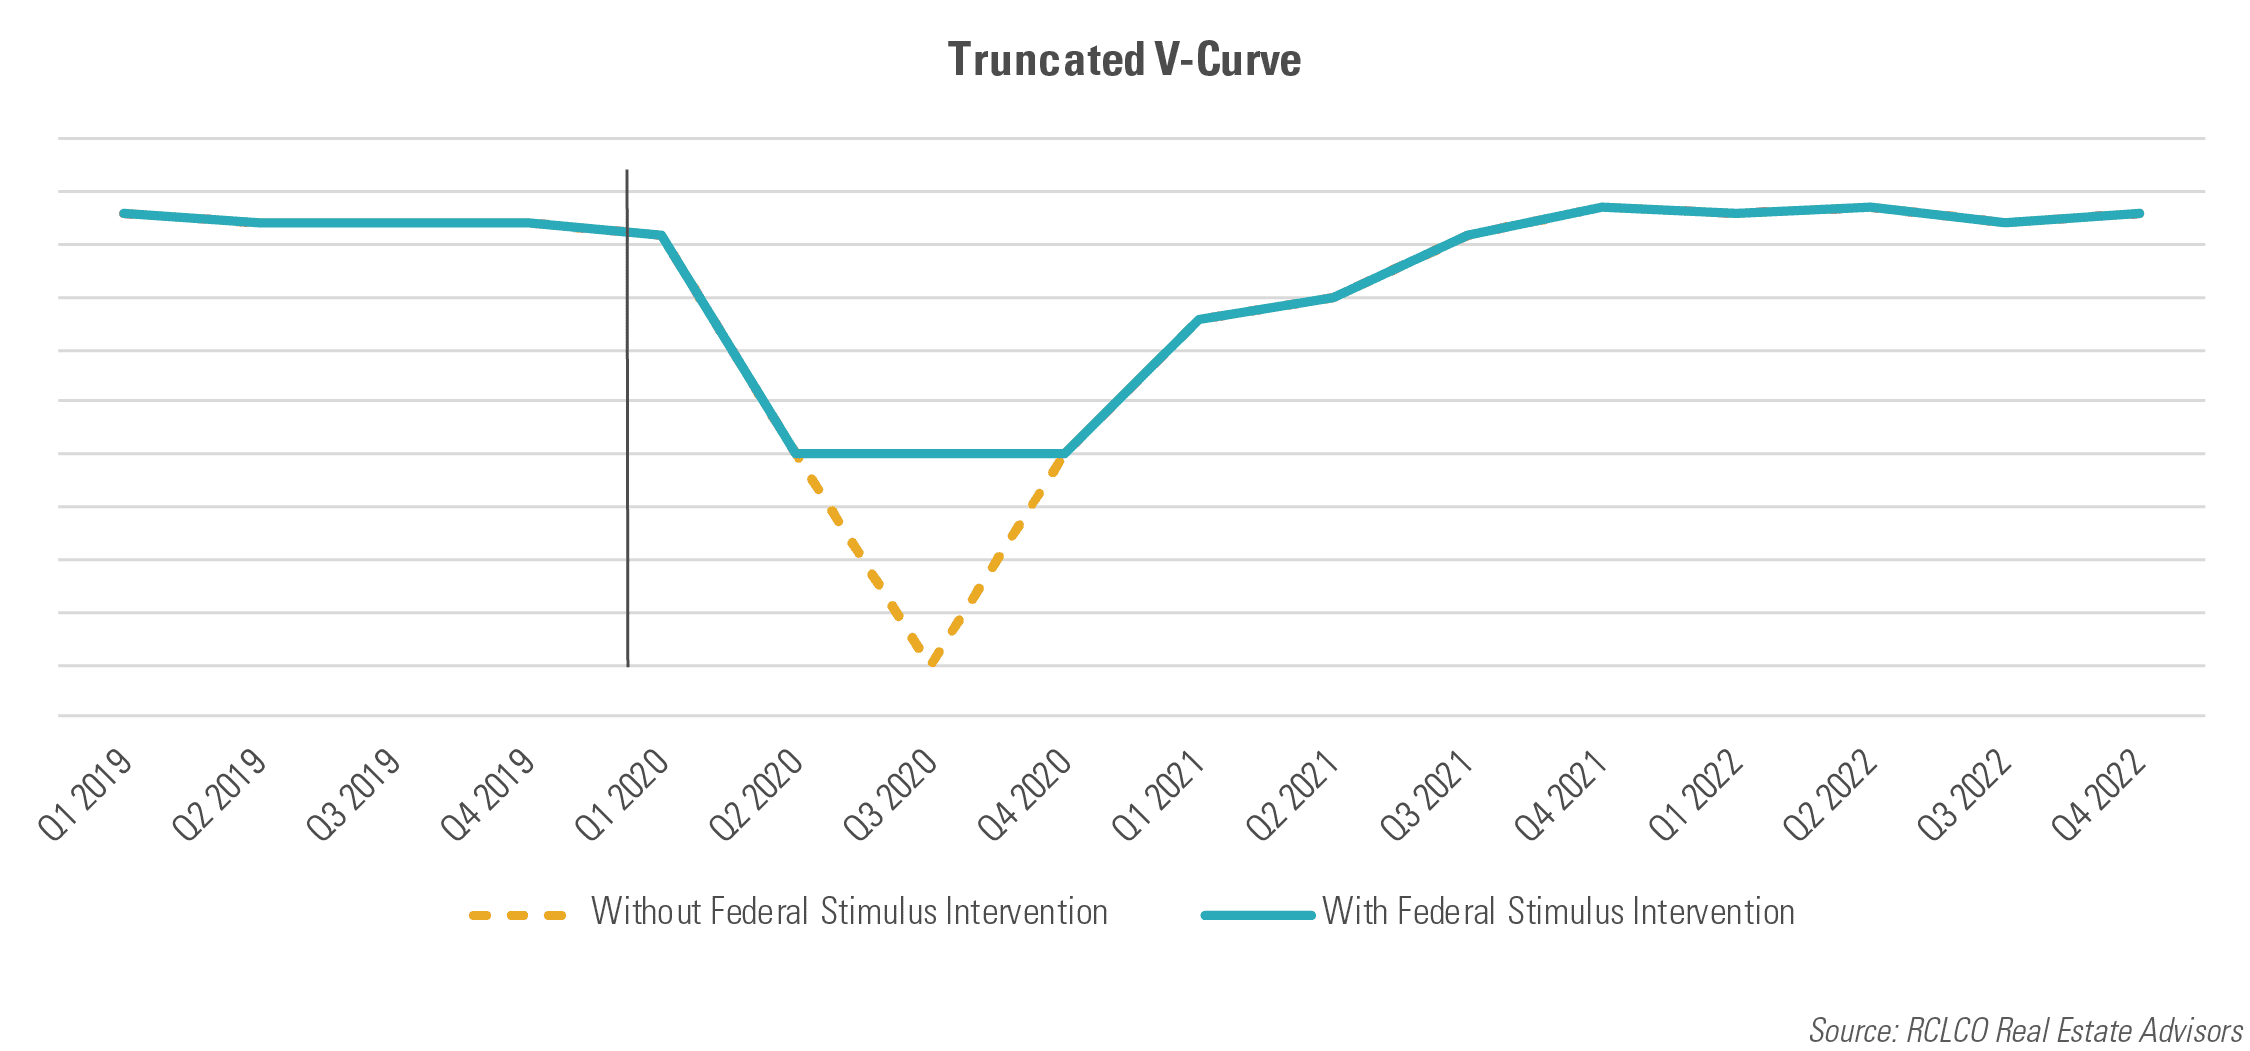 COVID-19 Sentiment Survey Truncated V-Curve